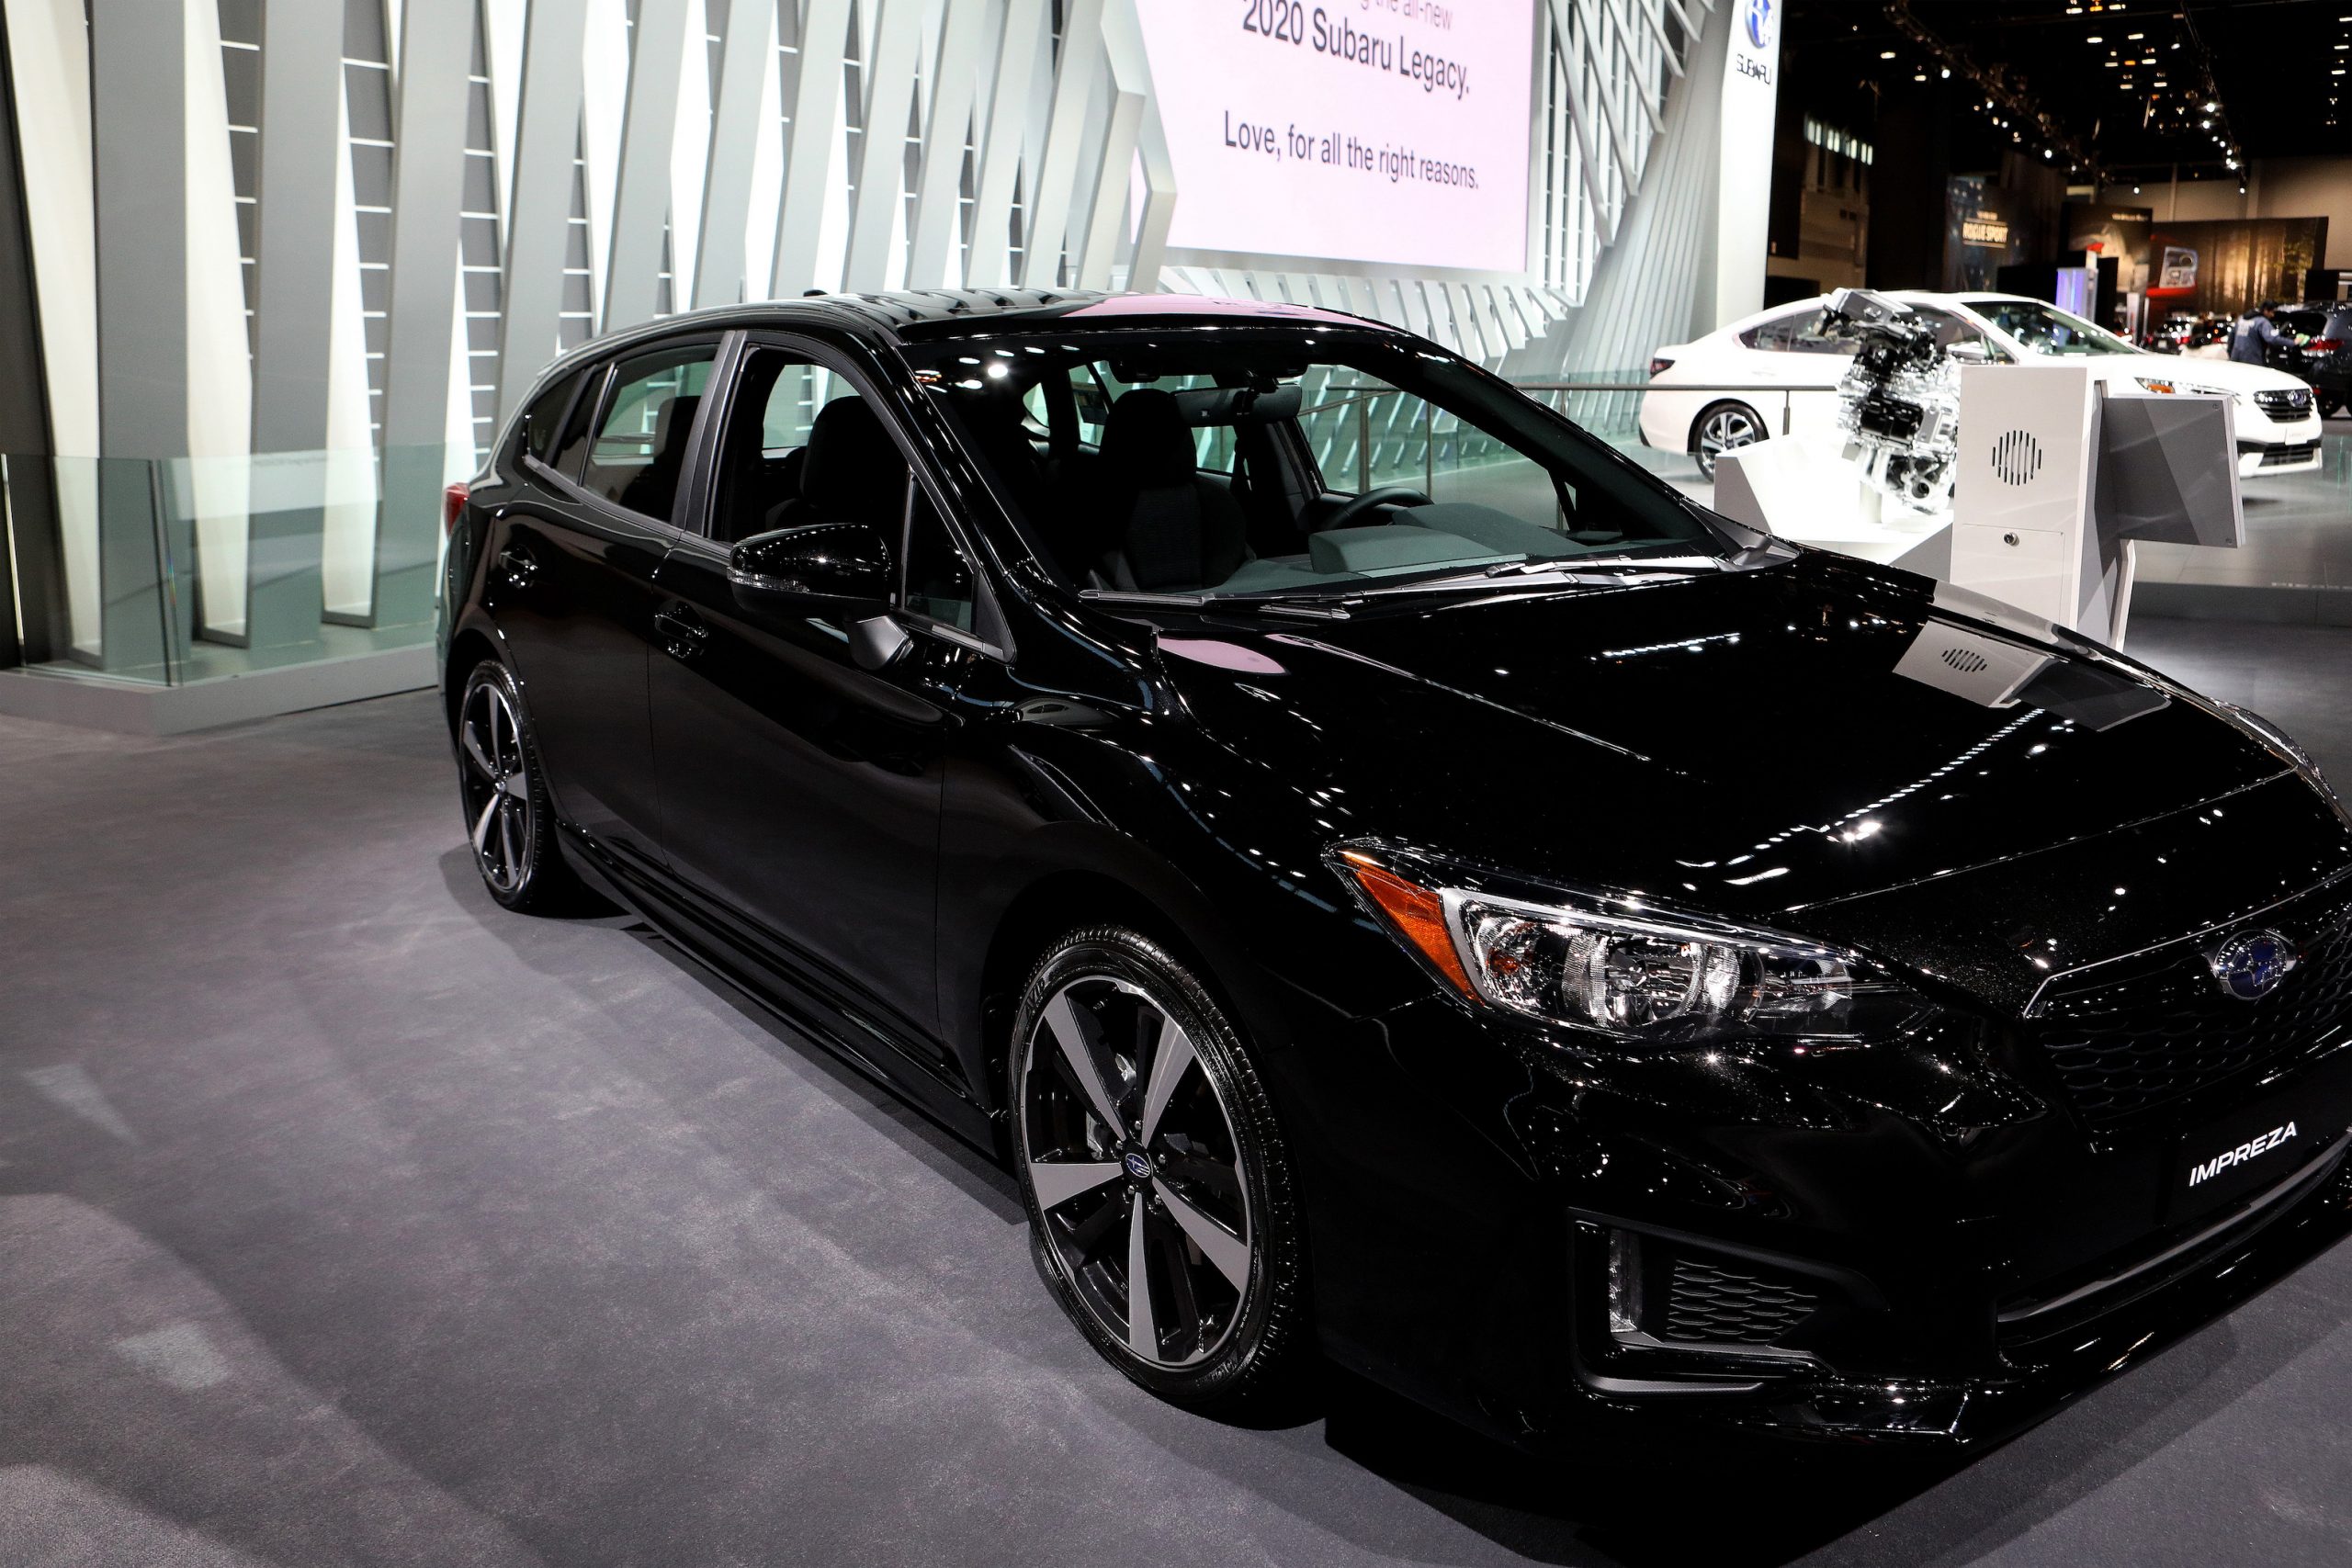 Black 2019 Subaru Impreza is on display at the 111th Annual Chicago Auto Show